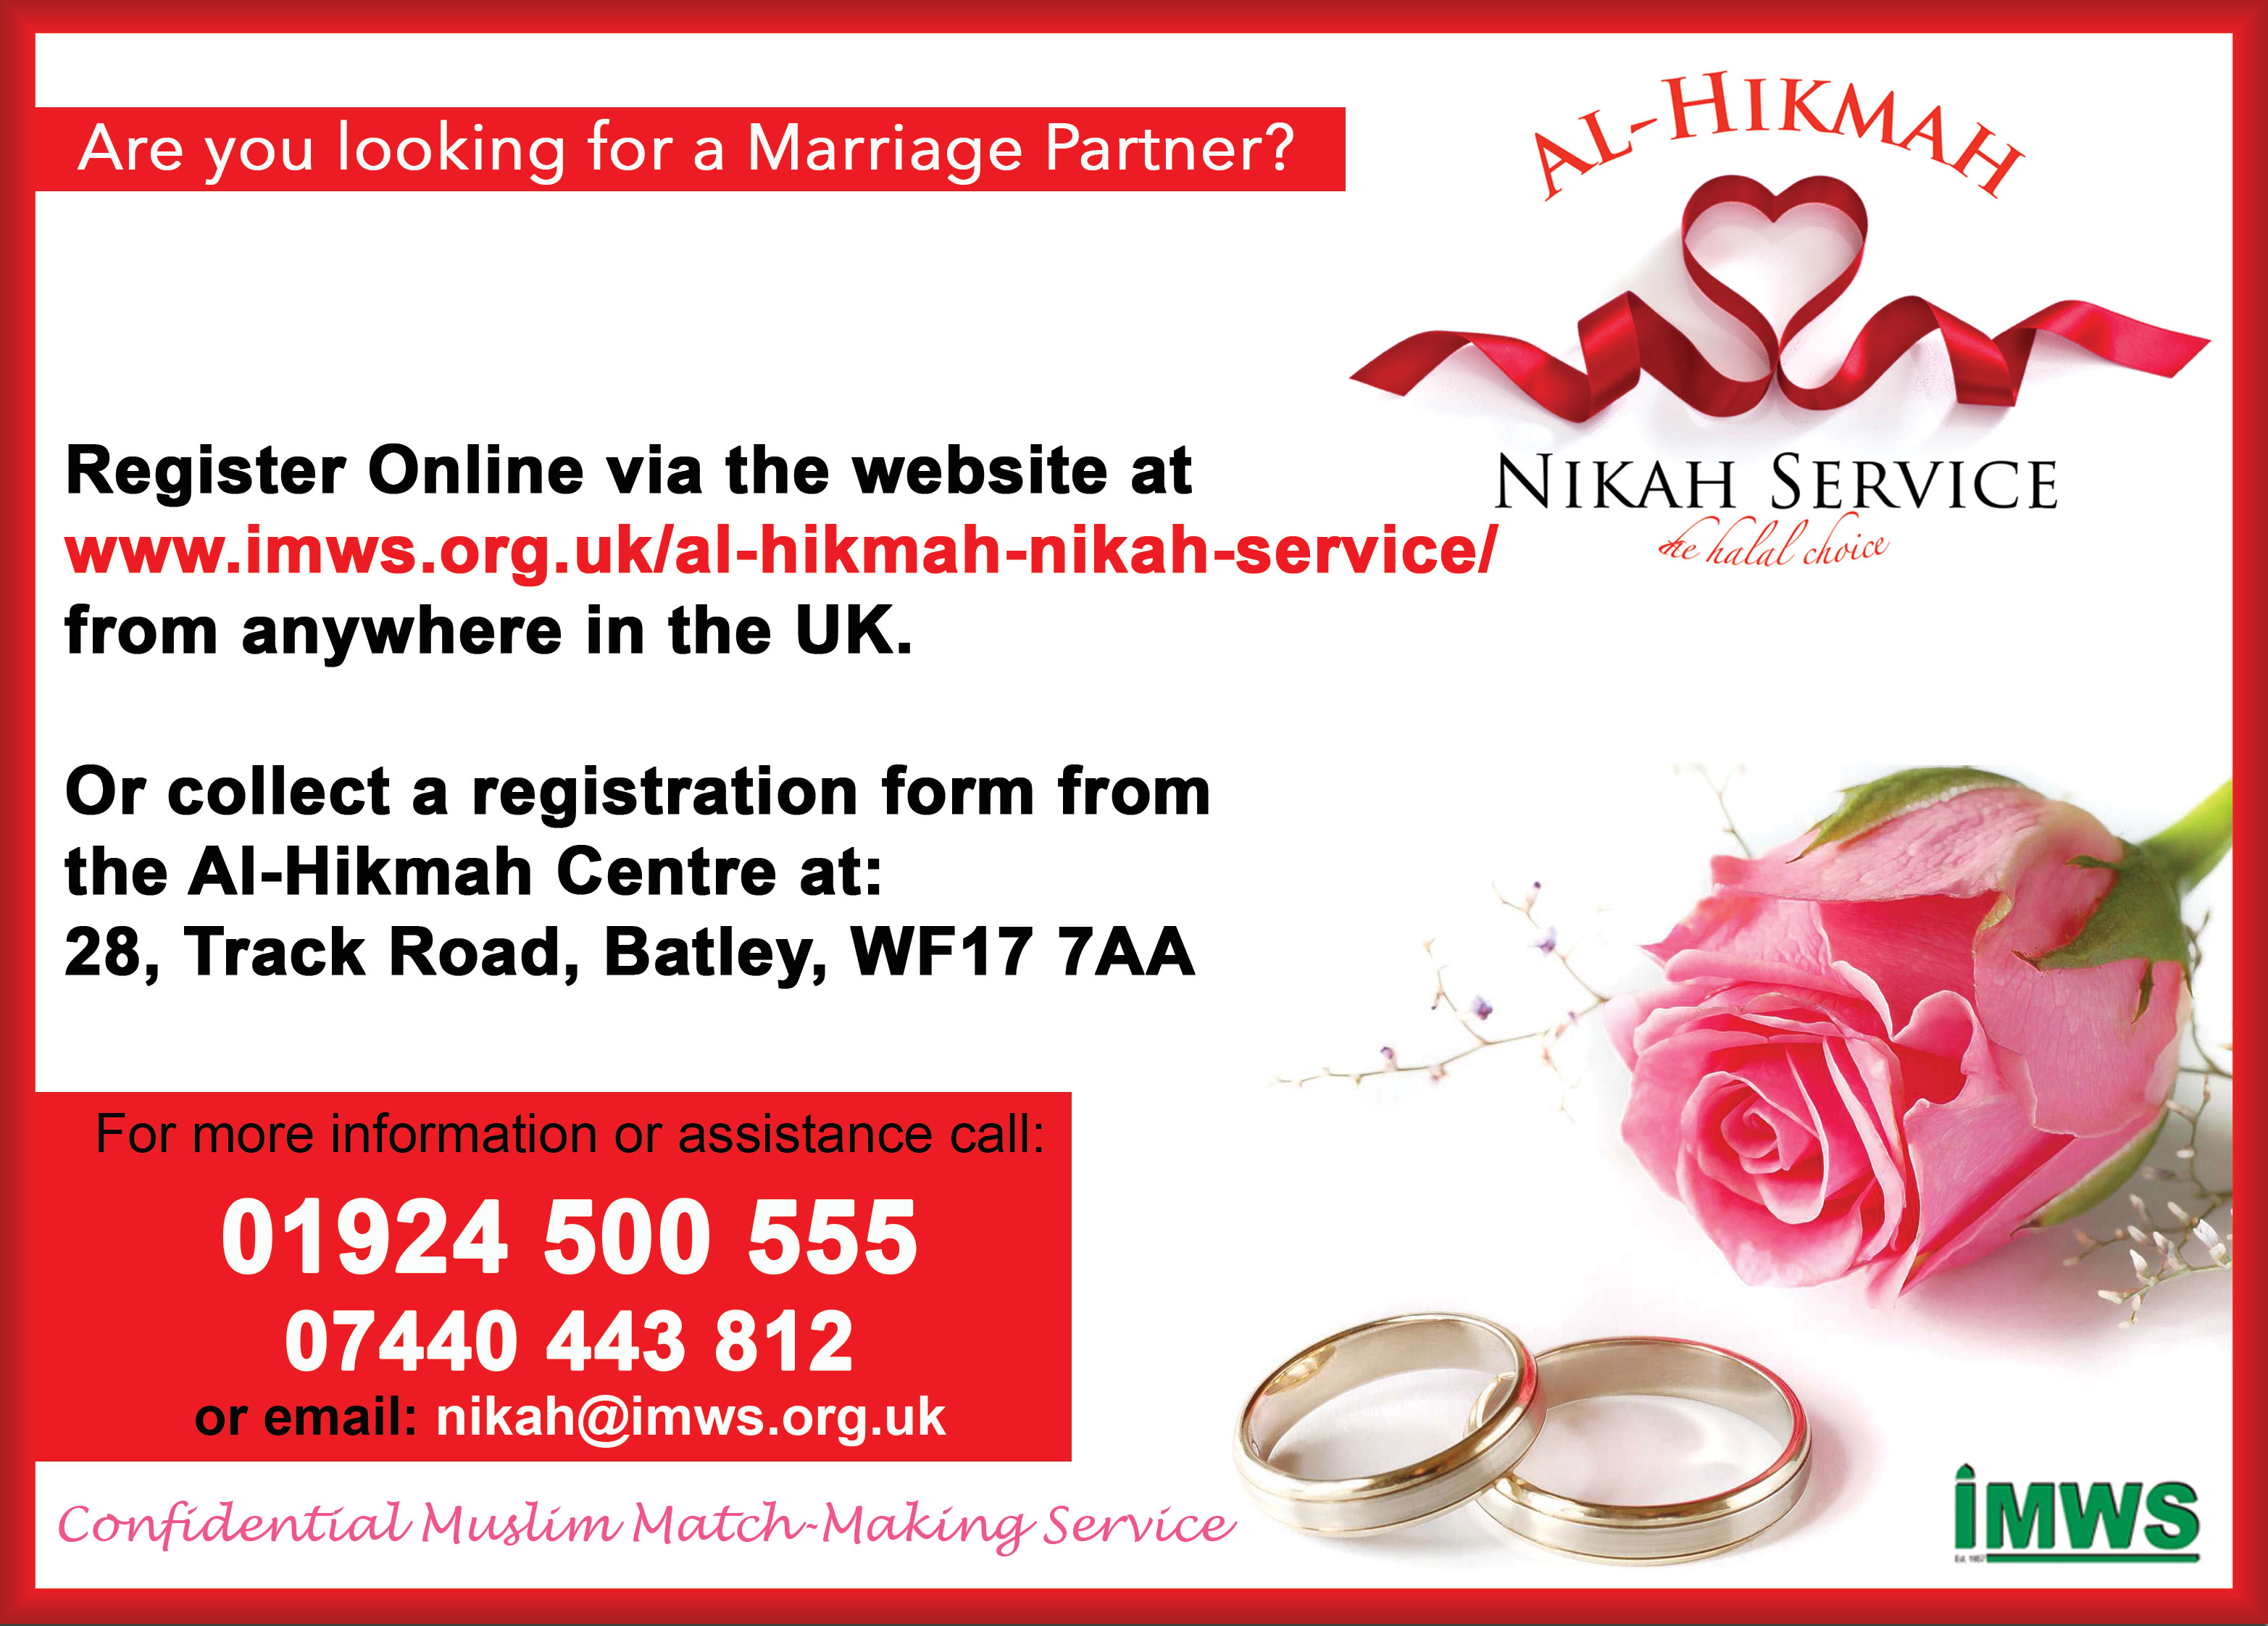 Al-Hikmah Nikah Service snap-shots go live!